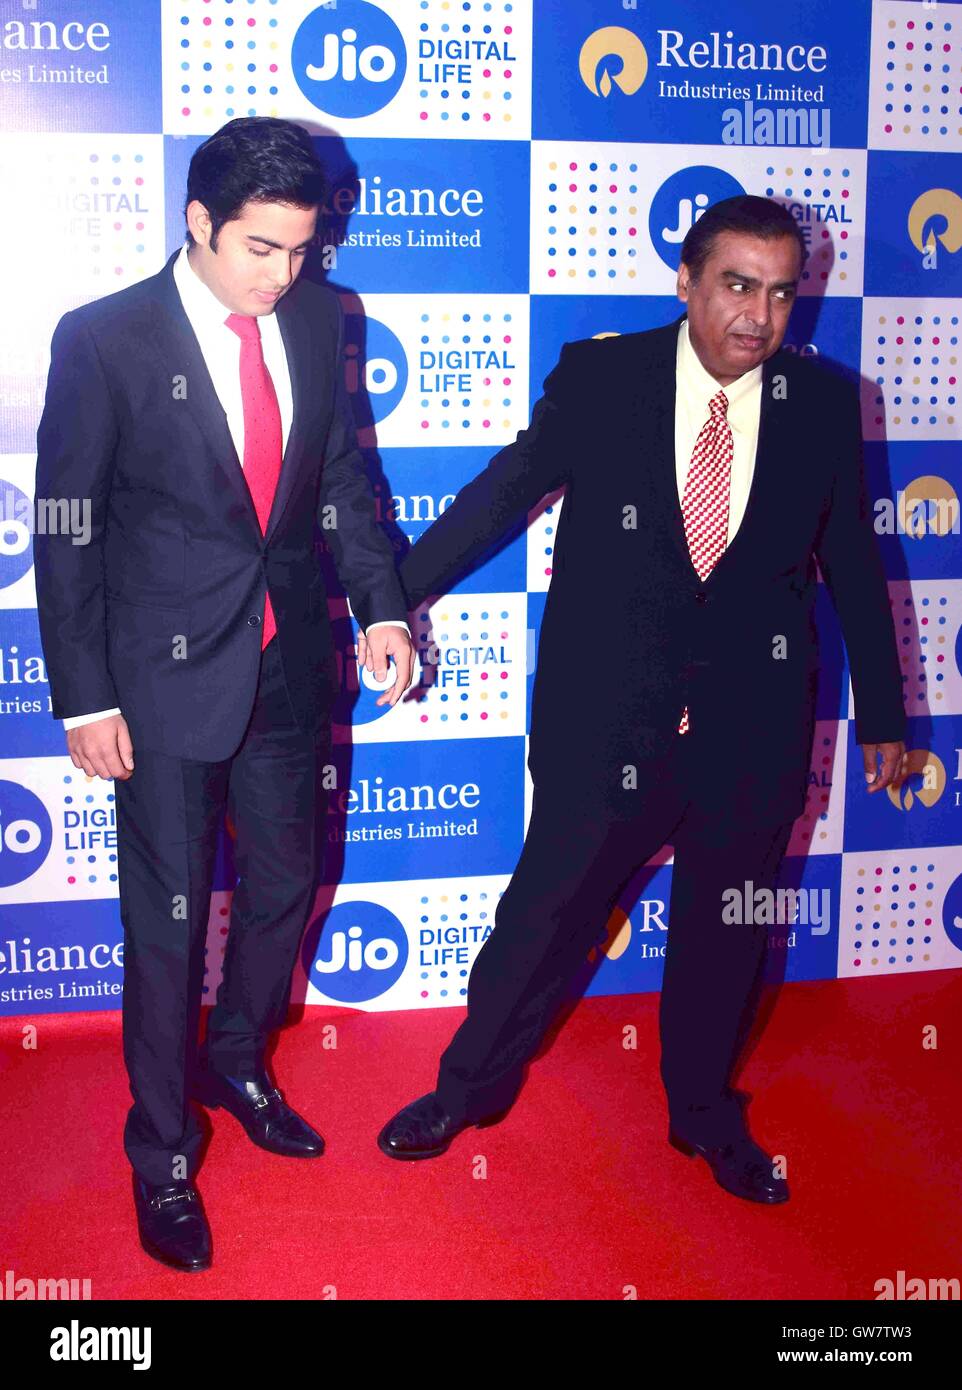 Reliance Industries Limited Chairman Mukesh Ambani with his son Akash Ambani Annual General Meeting Mumbai September 1, 2016 Stock Photo